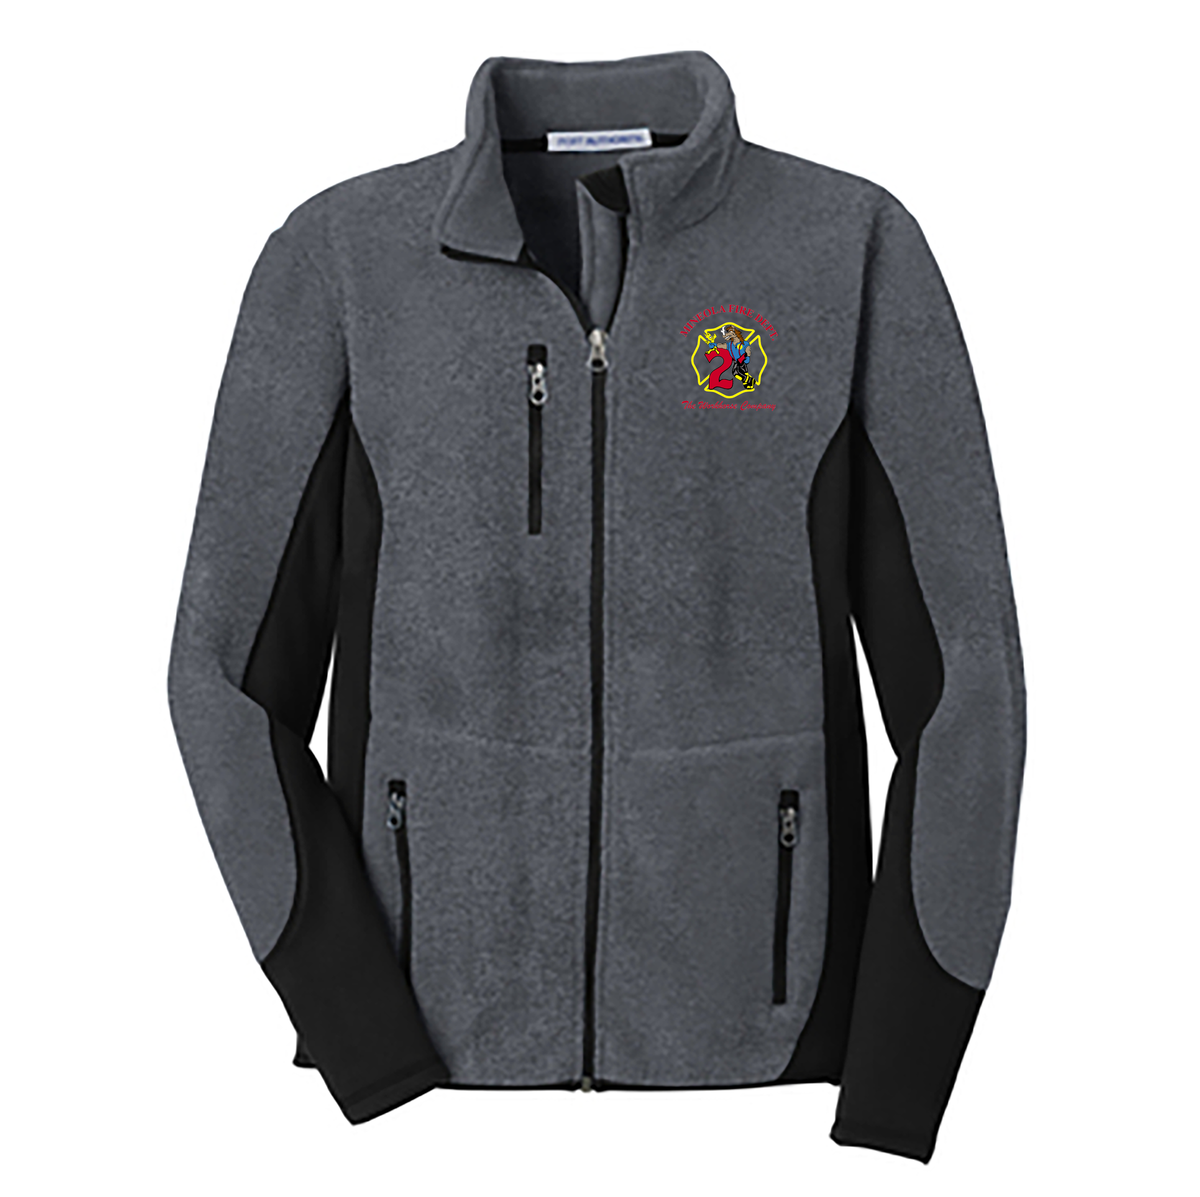 Mineola Fire Dept. R-Tek Pro Fleece Full-Zip Jacket